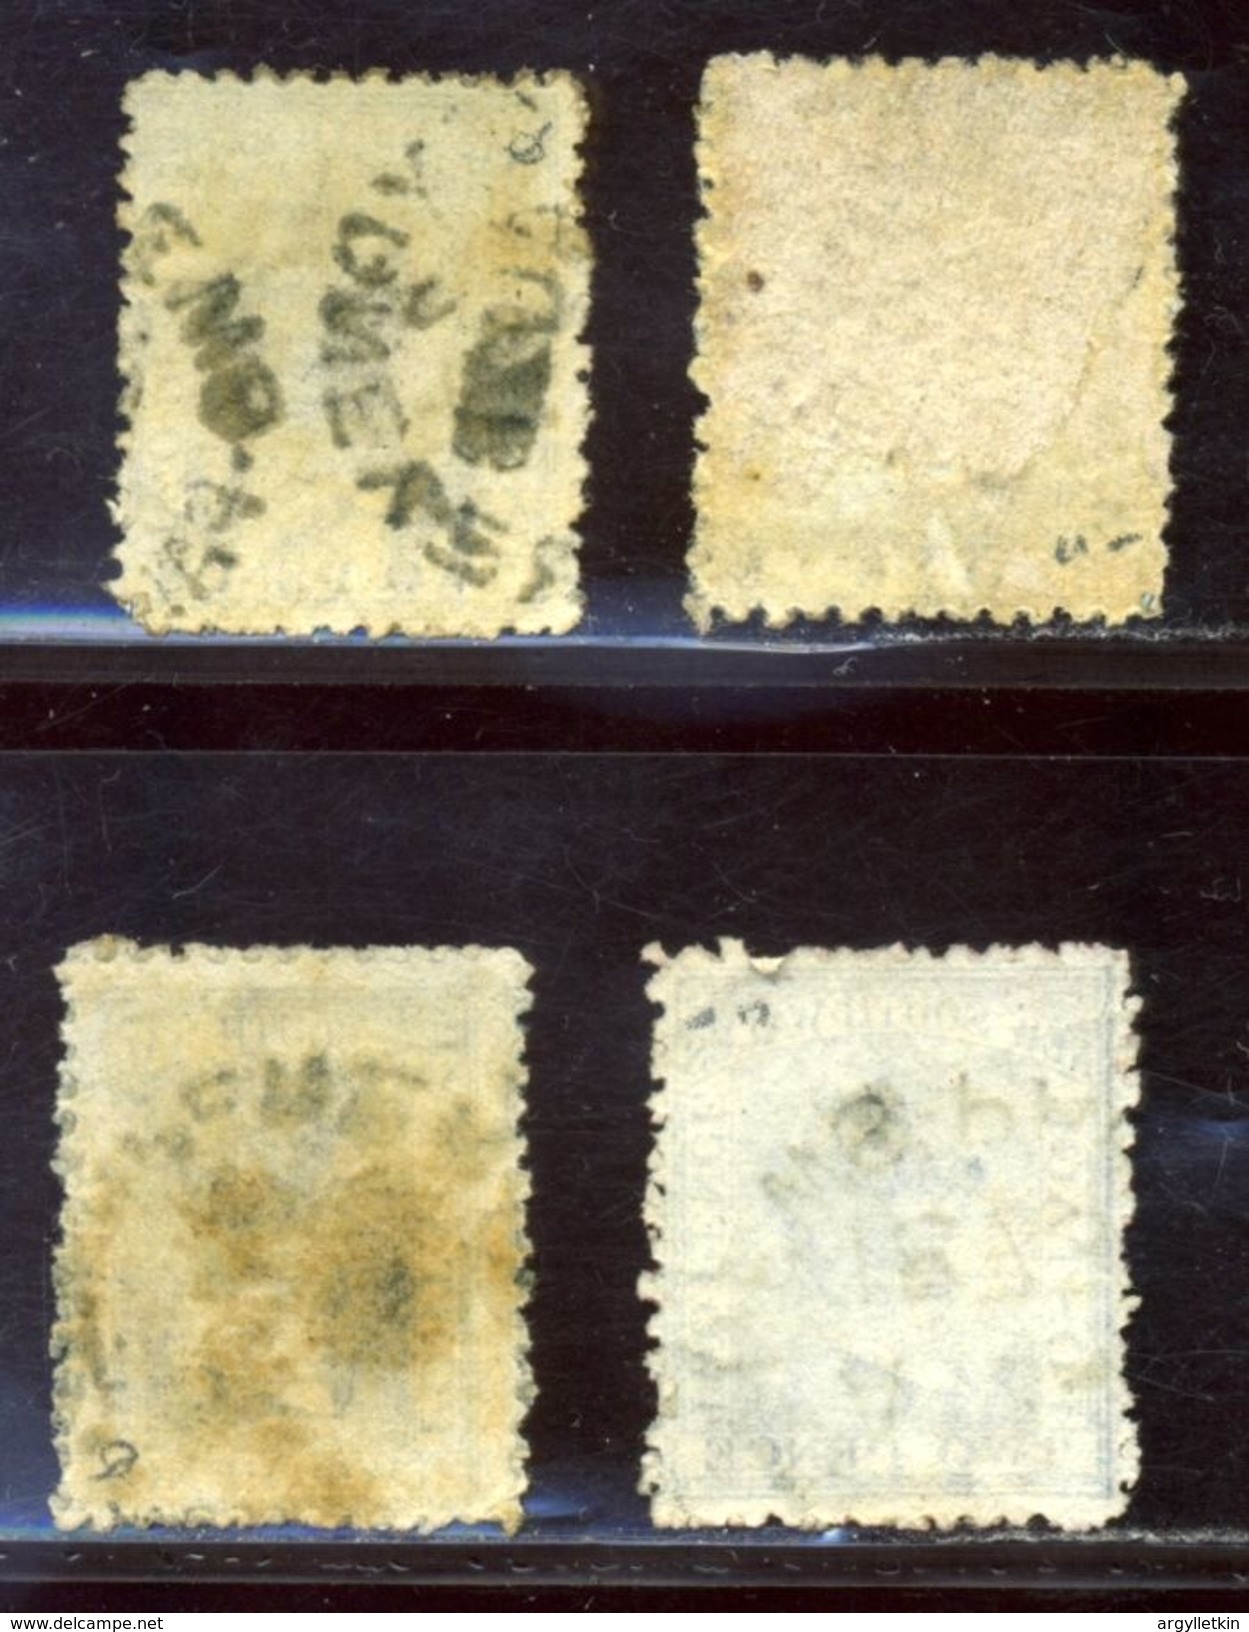 AUSTRALIA/NSW SYDNEY NEWSPAPER 1873 - Used Stamps